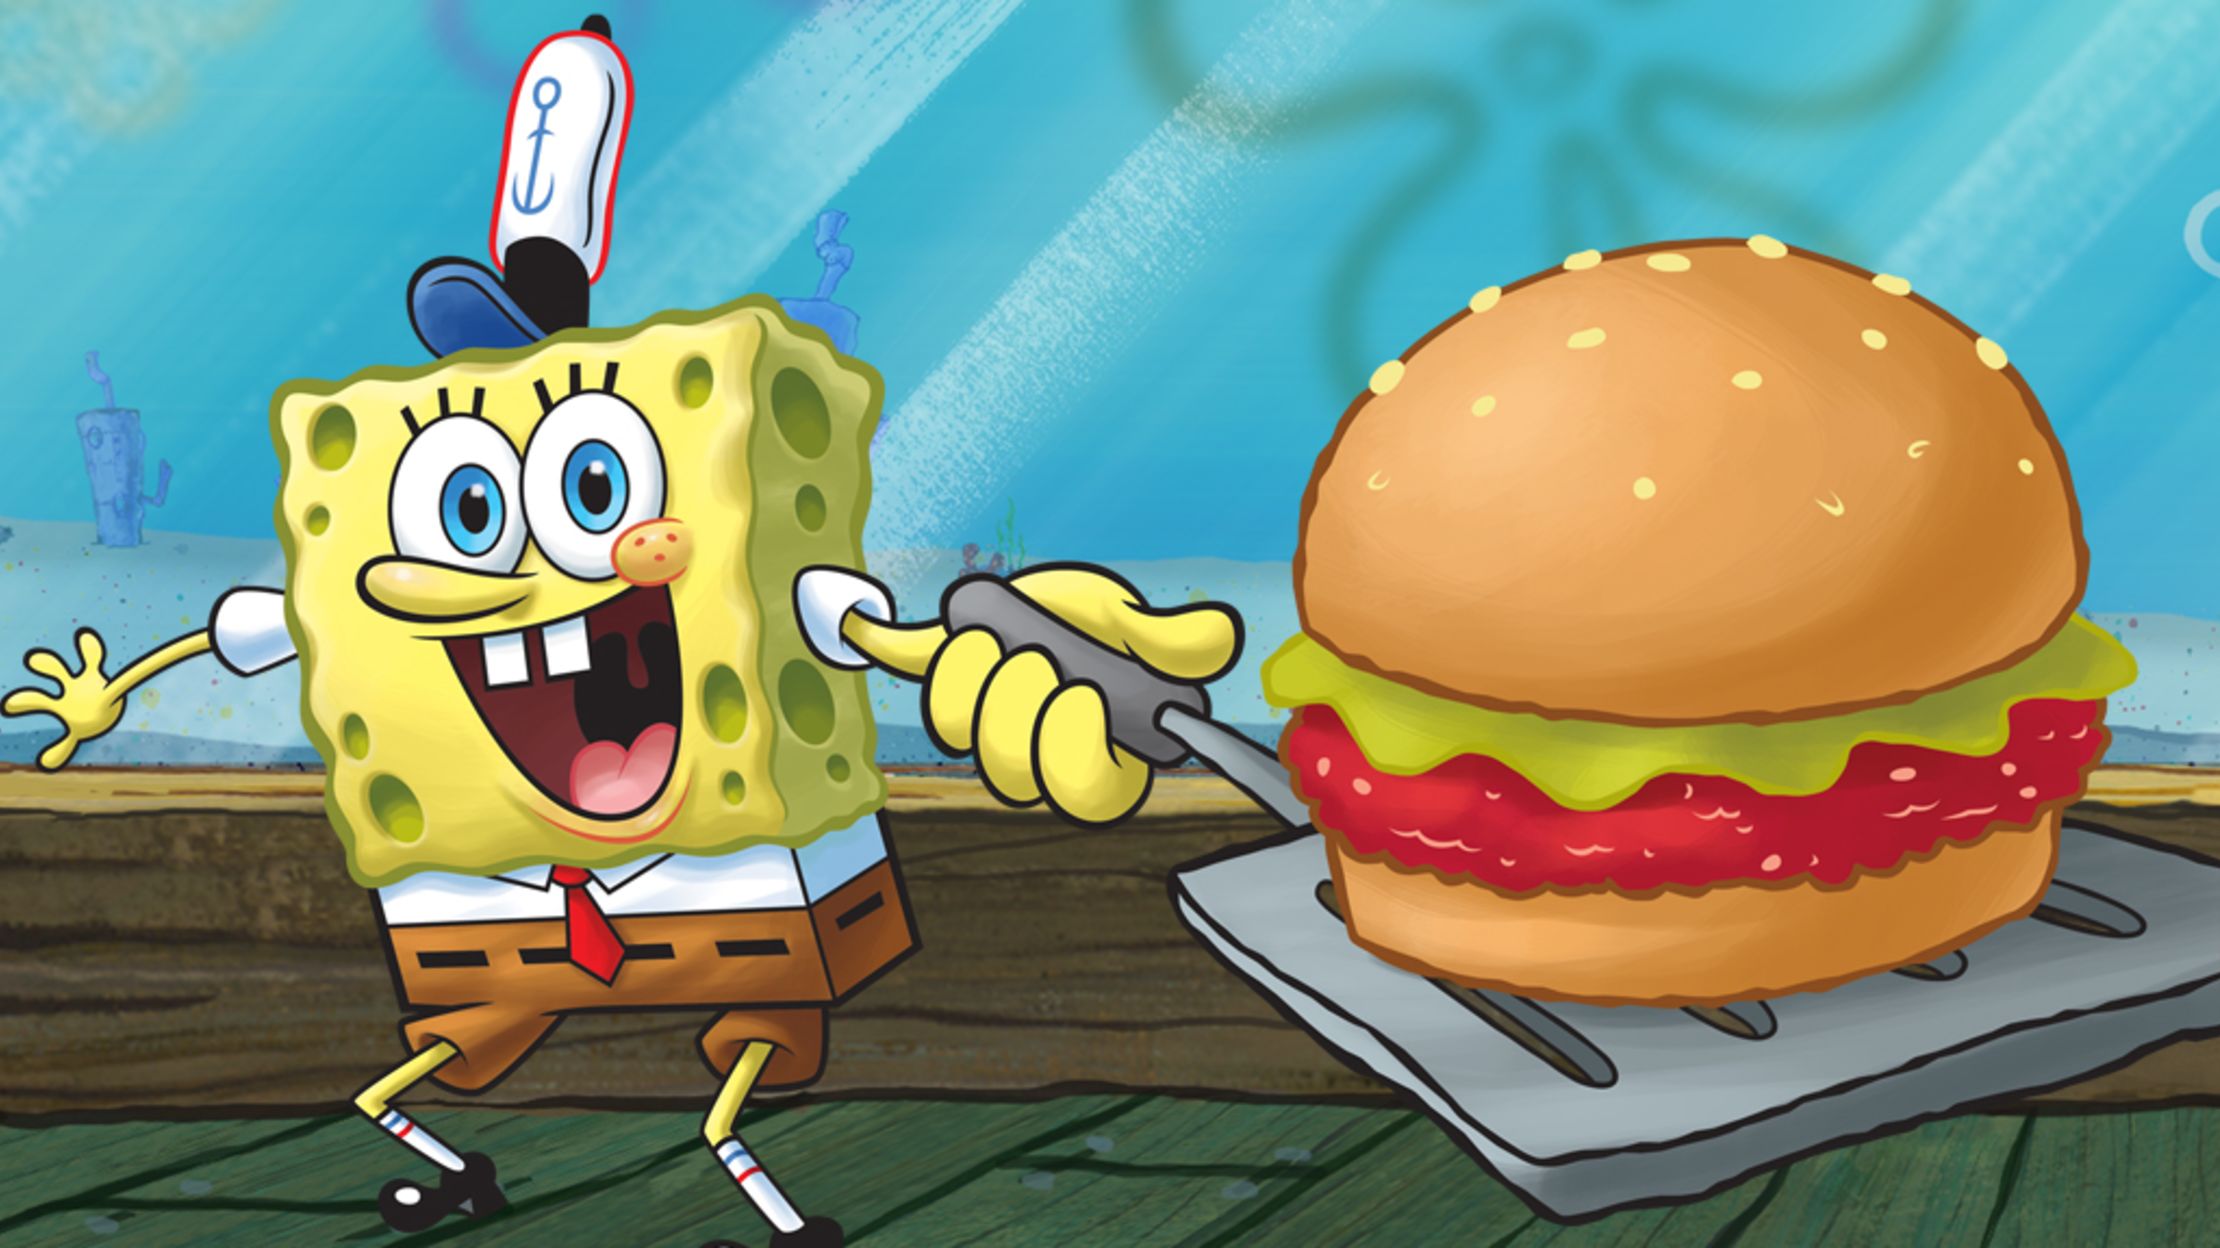 10. What's the famous burger spongebob serves at his restaurant. 